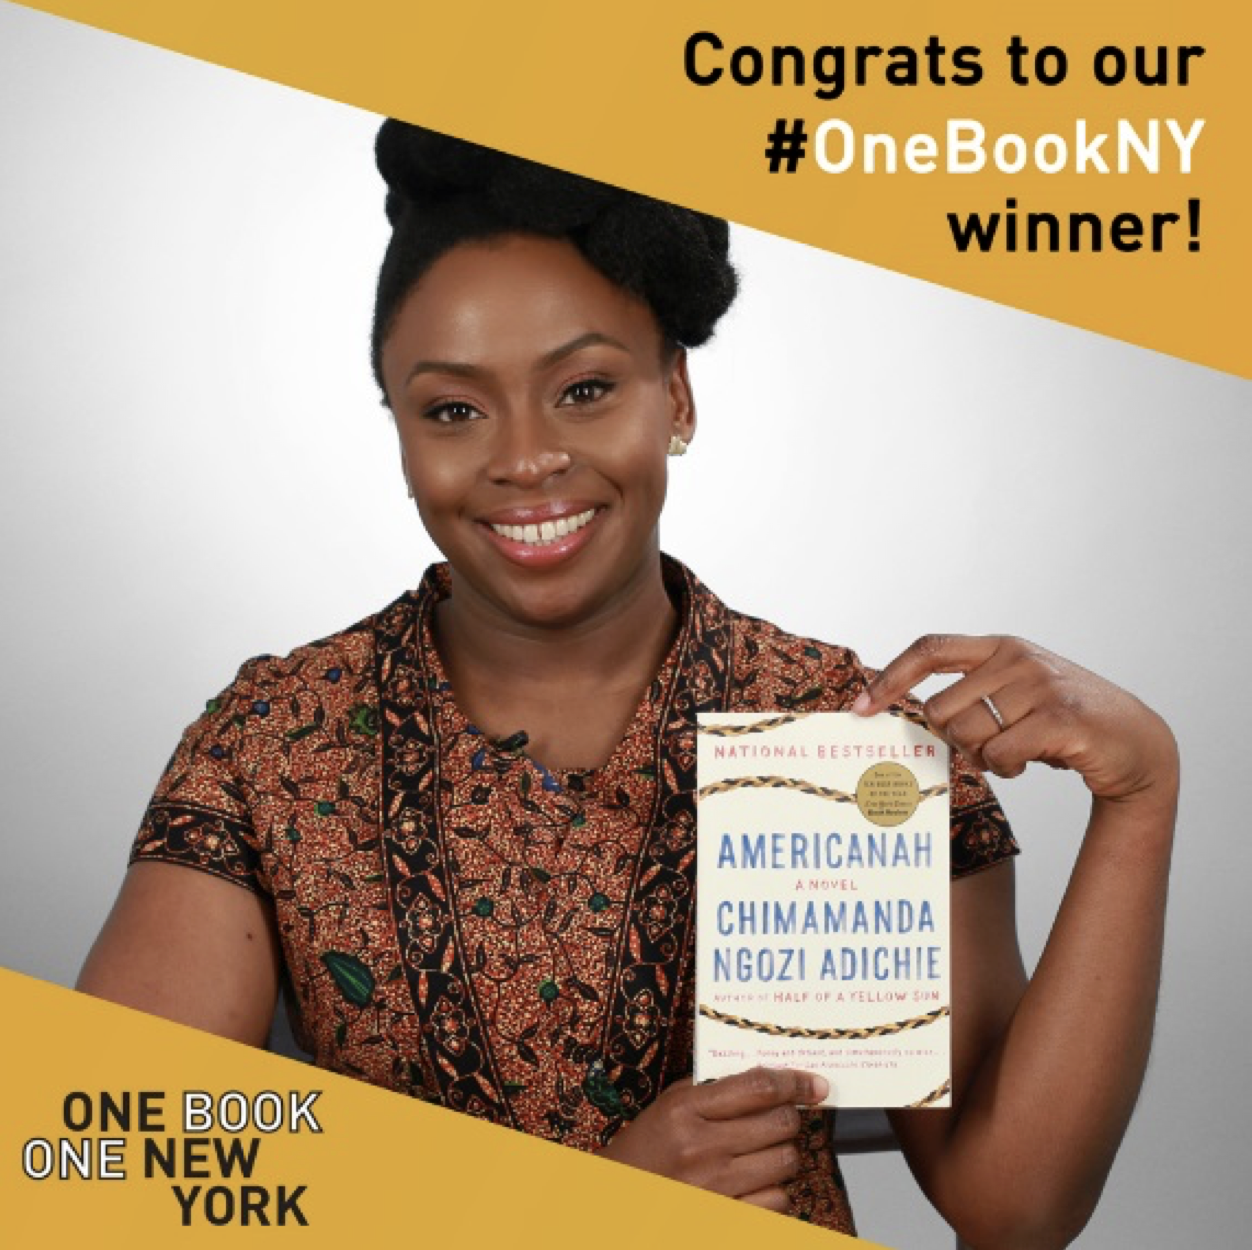 New Yorkers chose Chimamanda Ngozi Adichie’s Americanah as the winning book